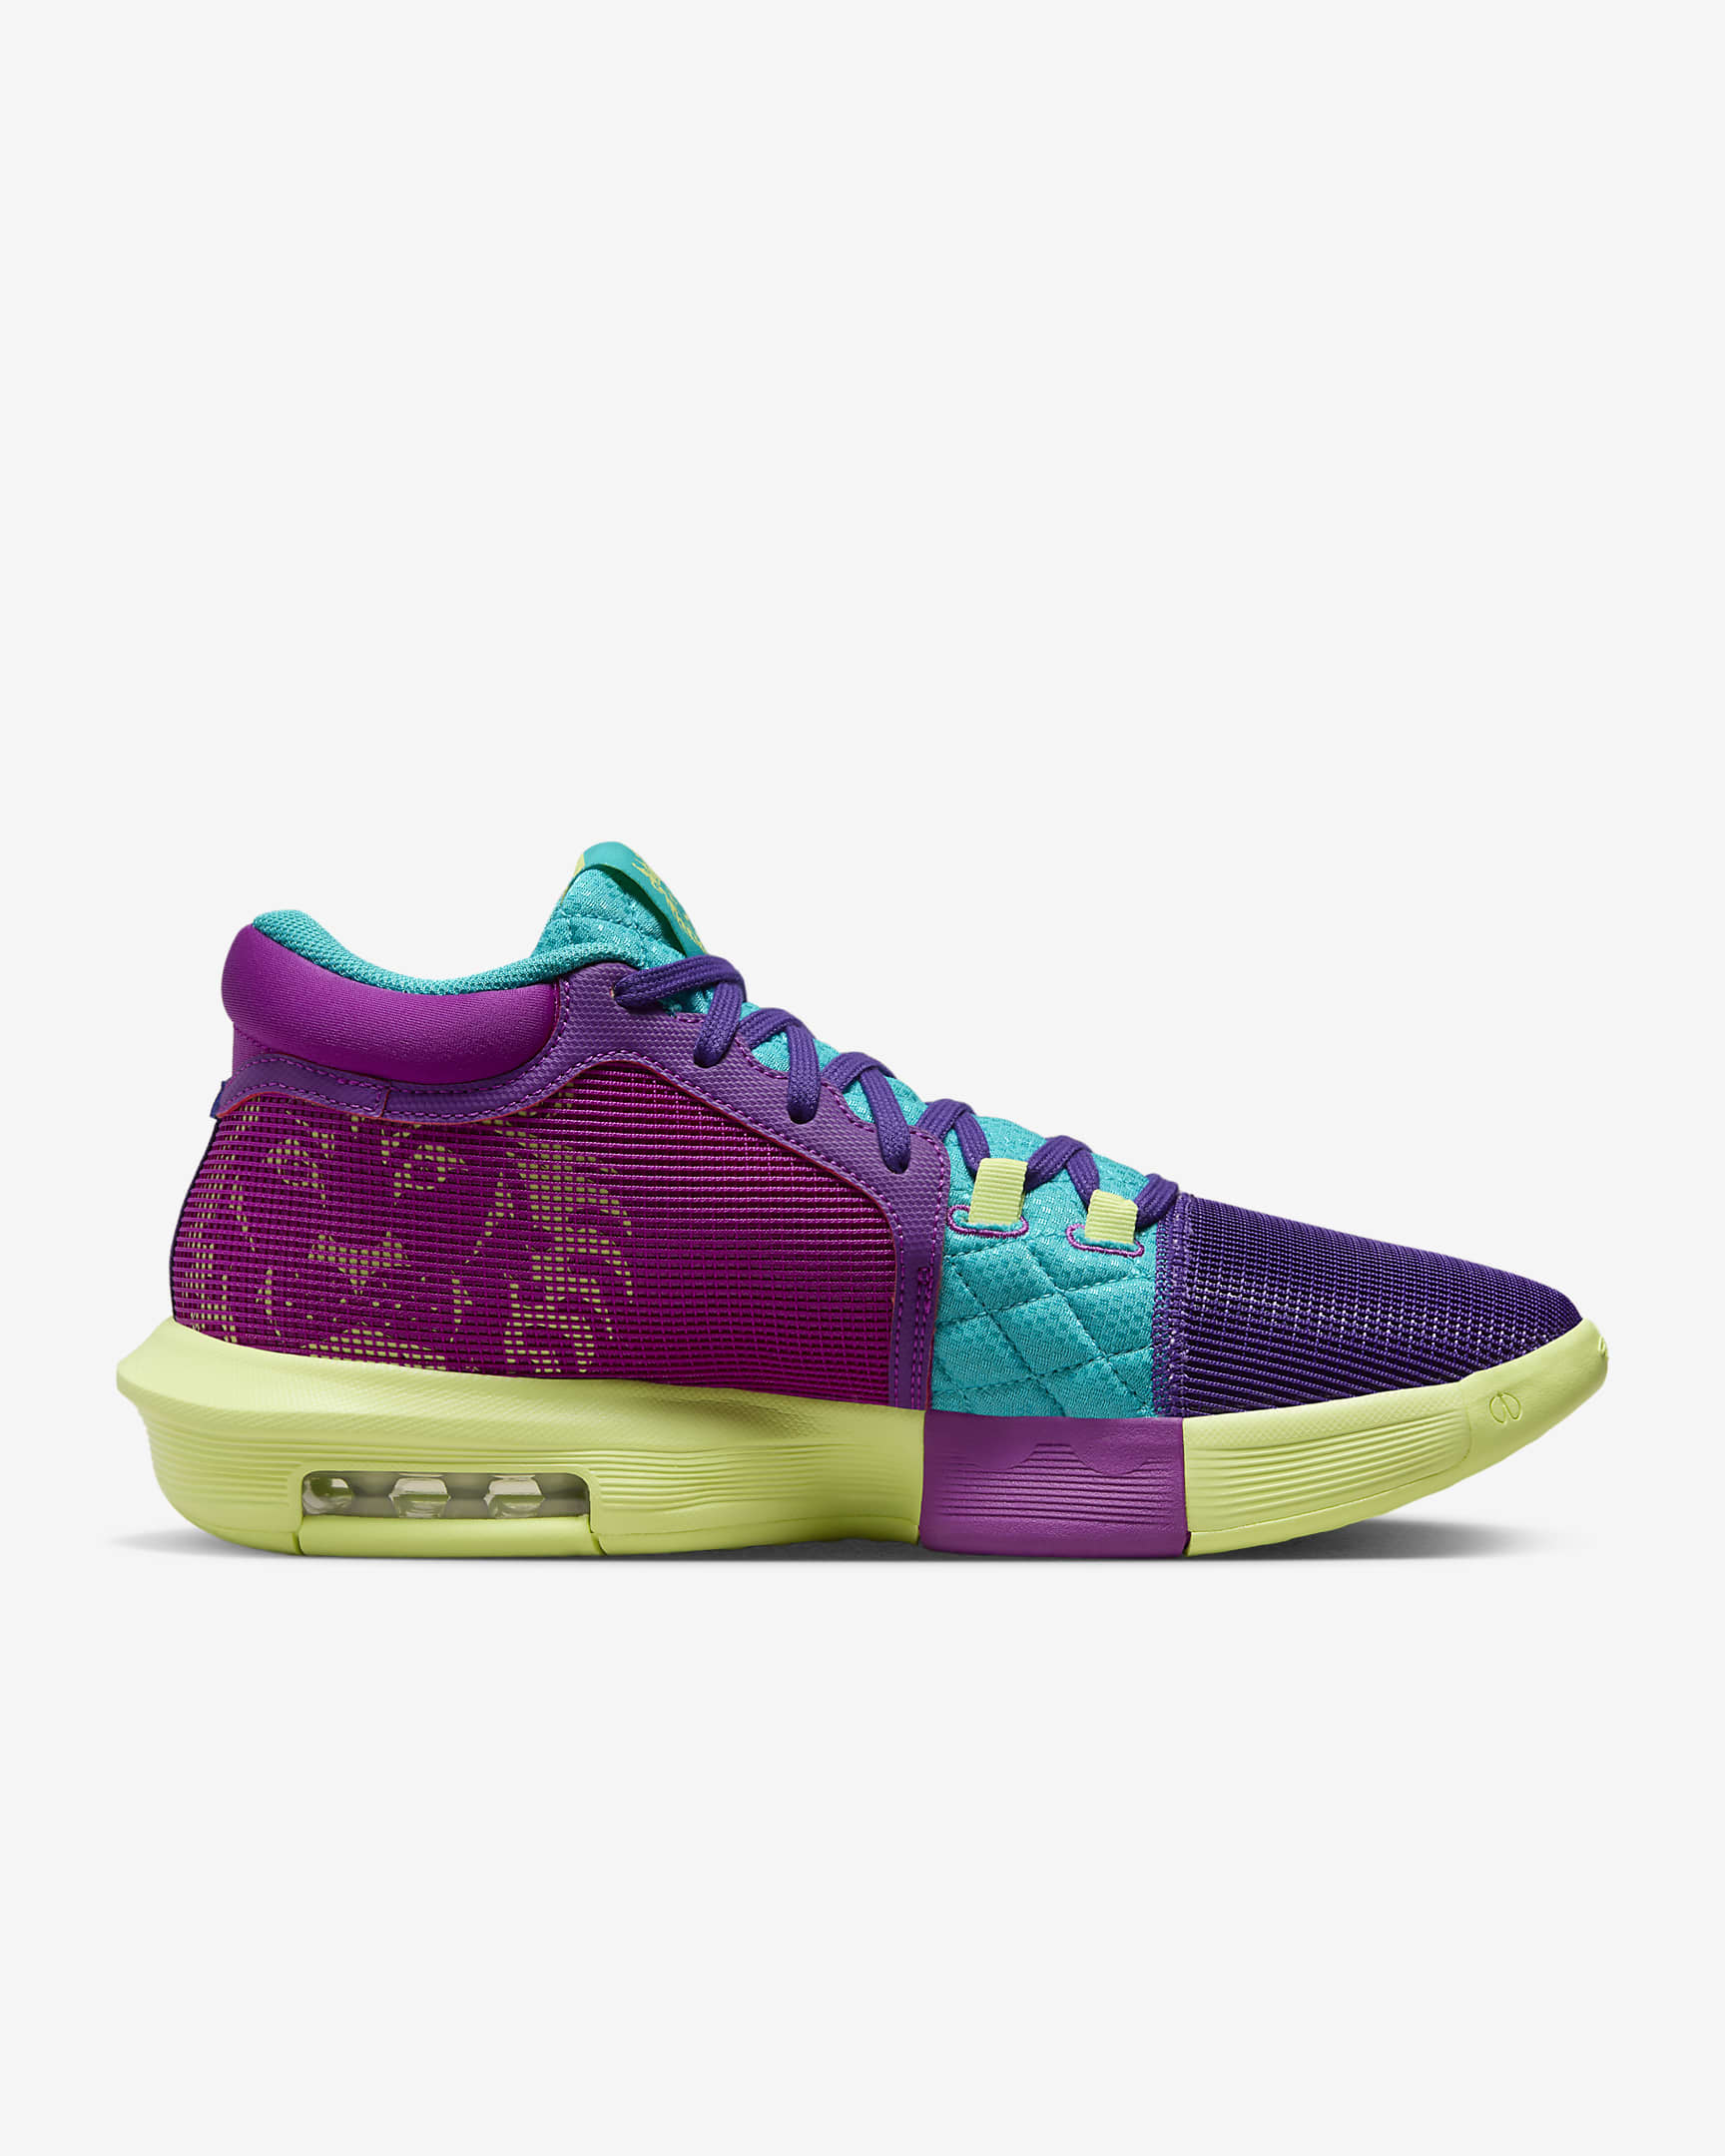 LeBron Witness 8 Basketball Shoes. Nike DK